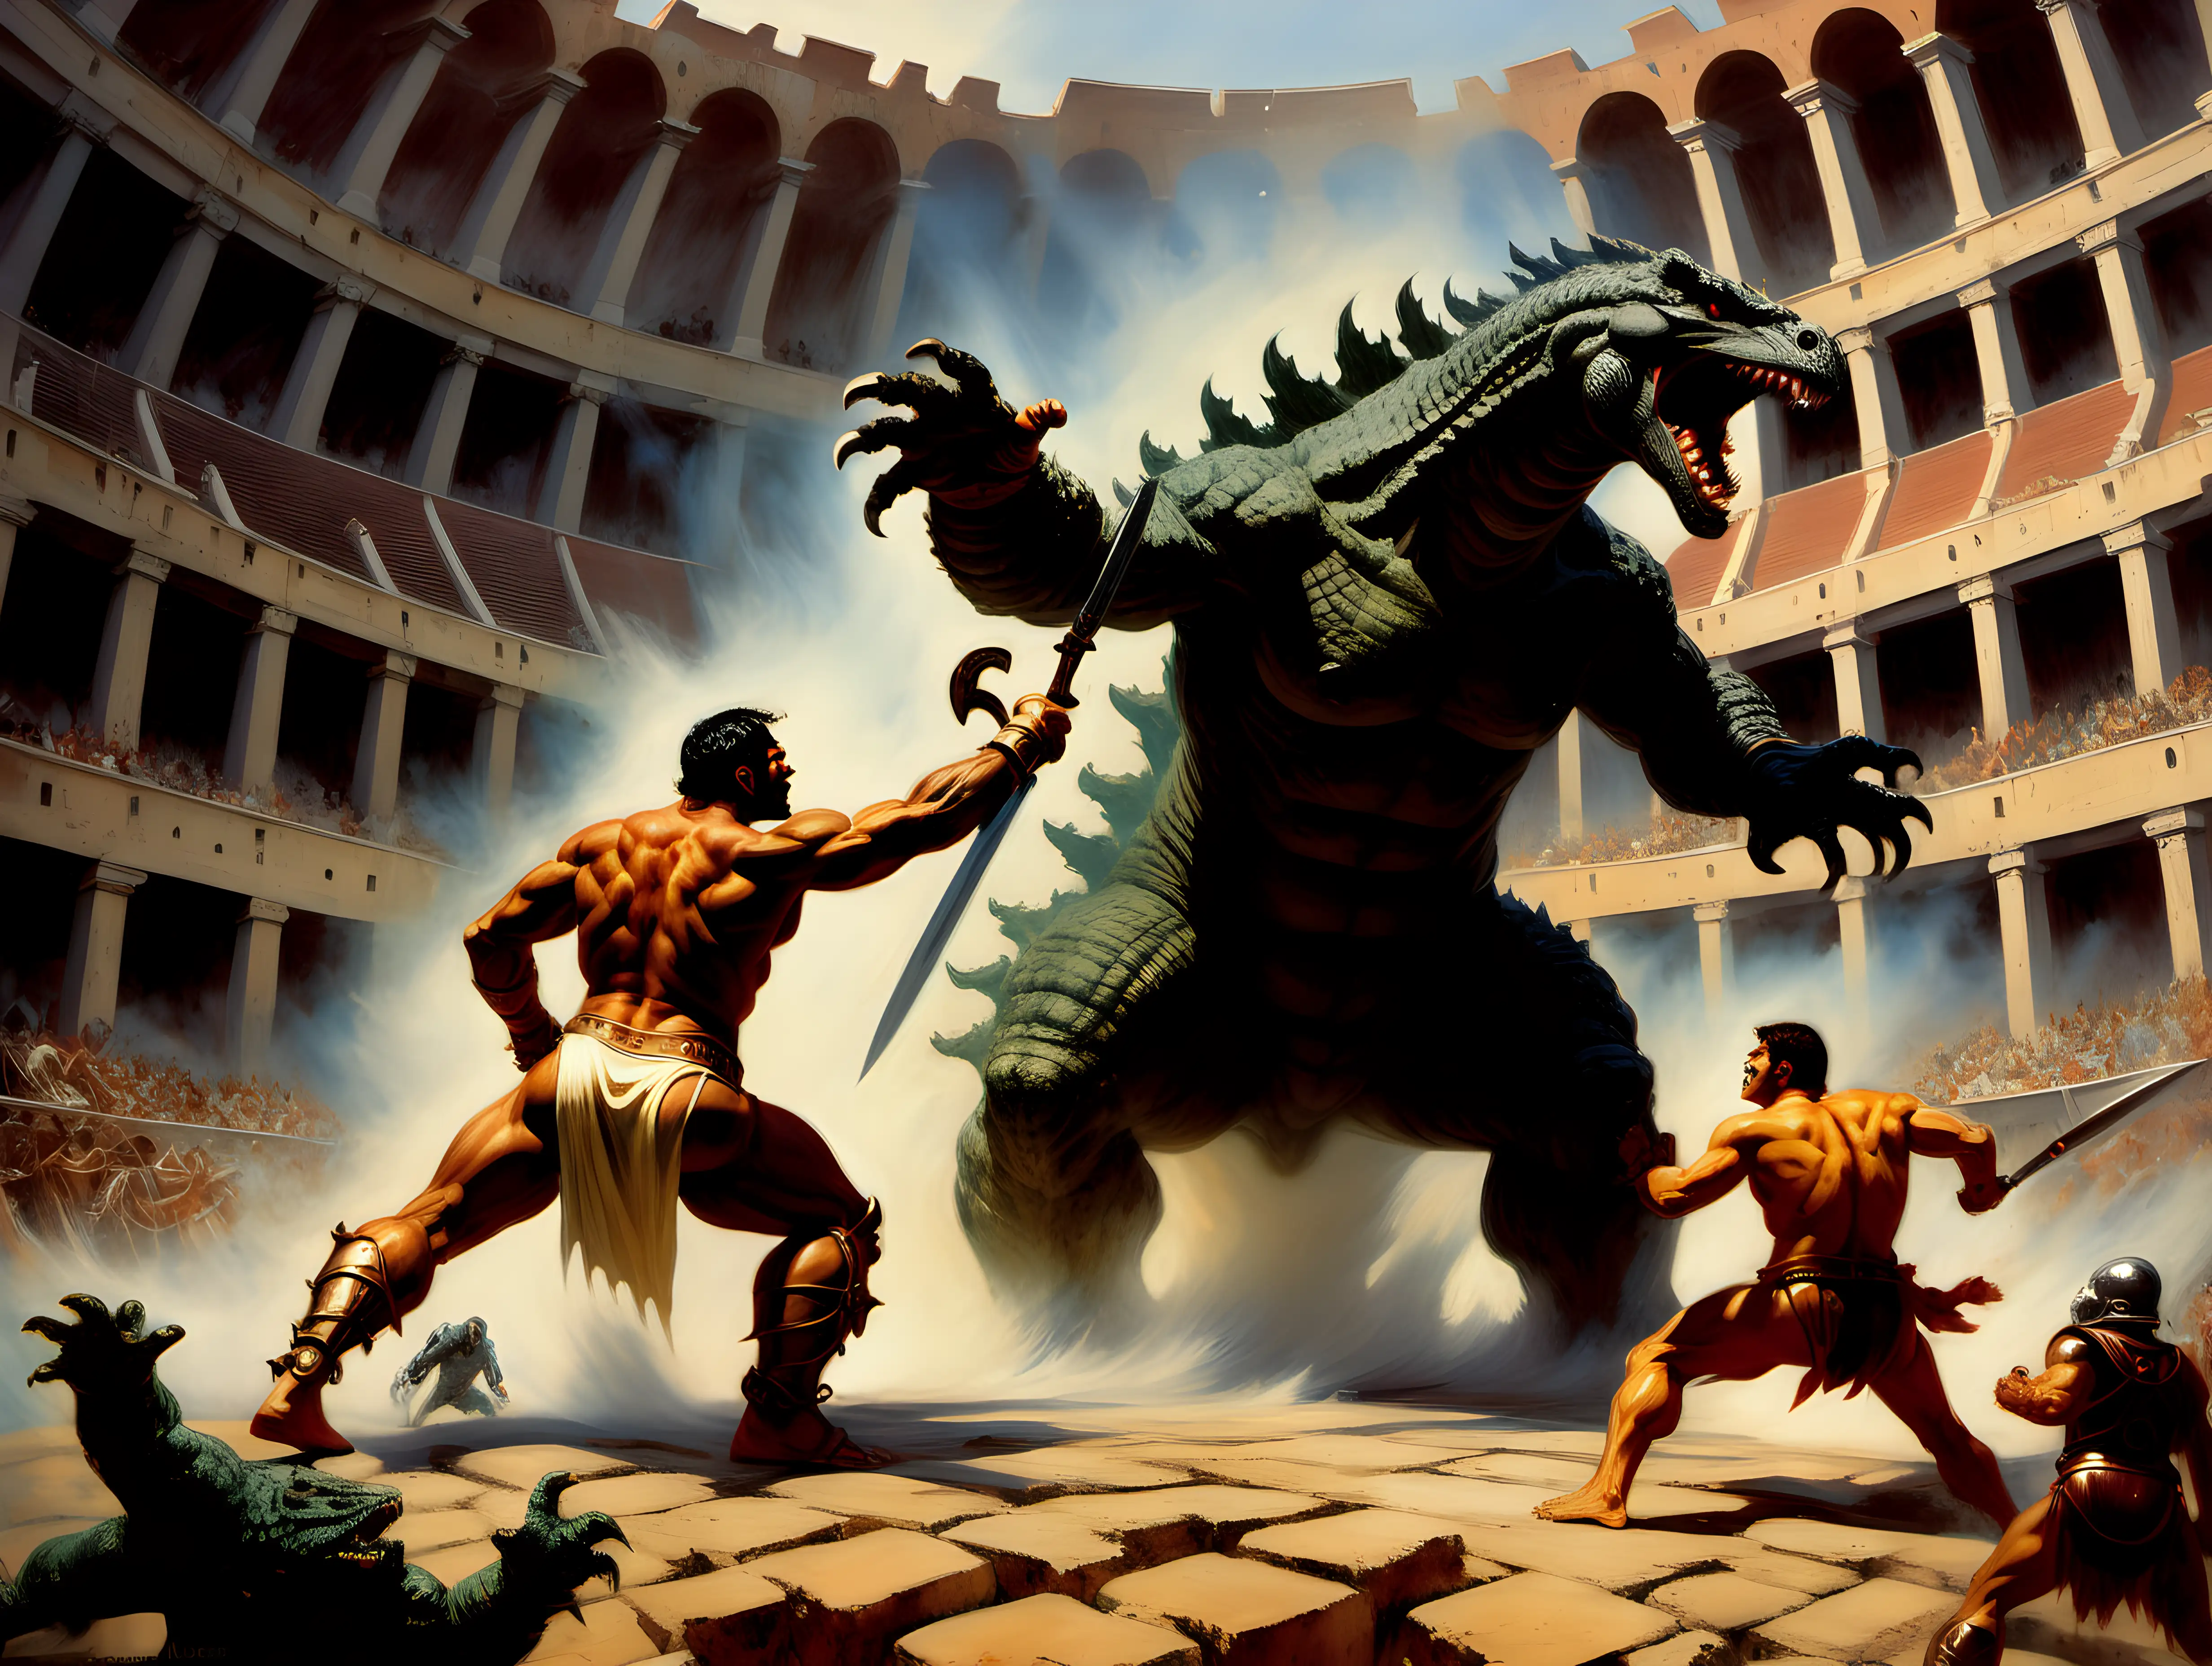 Epic Battle Gladiators Confronting Godzilla in Ancient Rome Coliseum